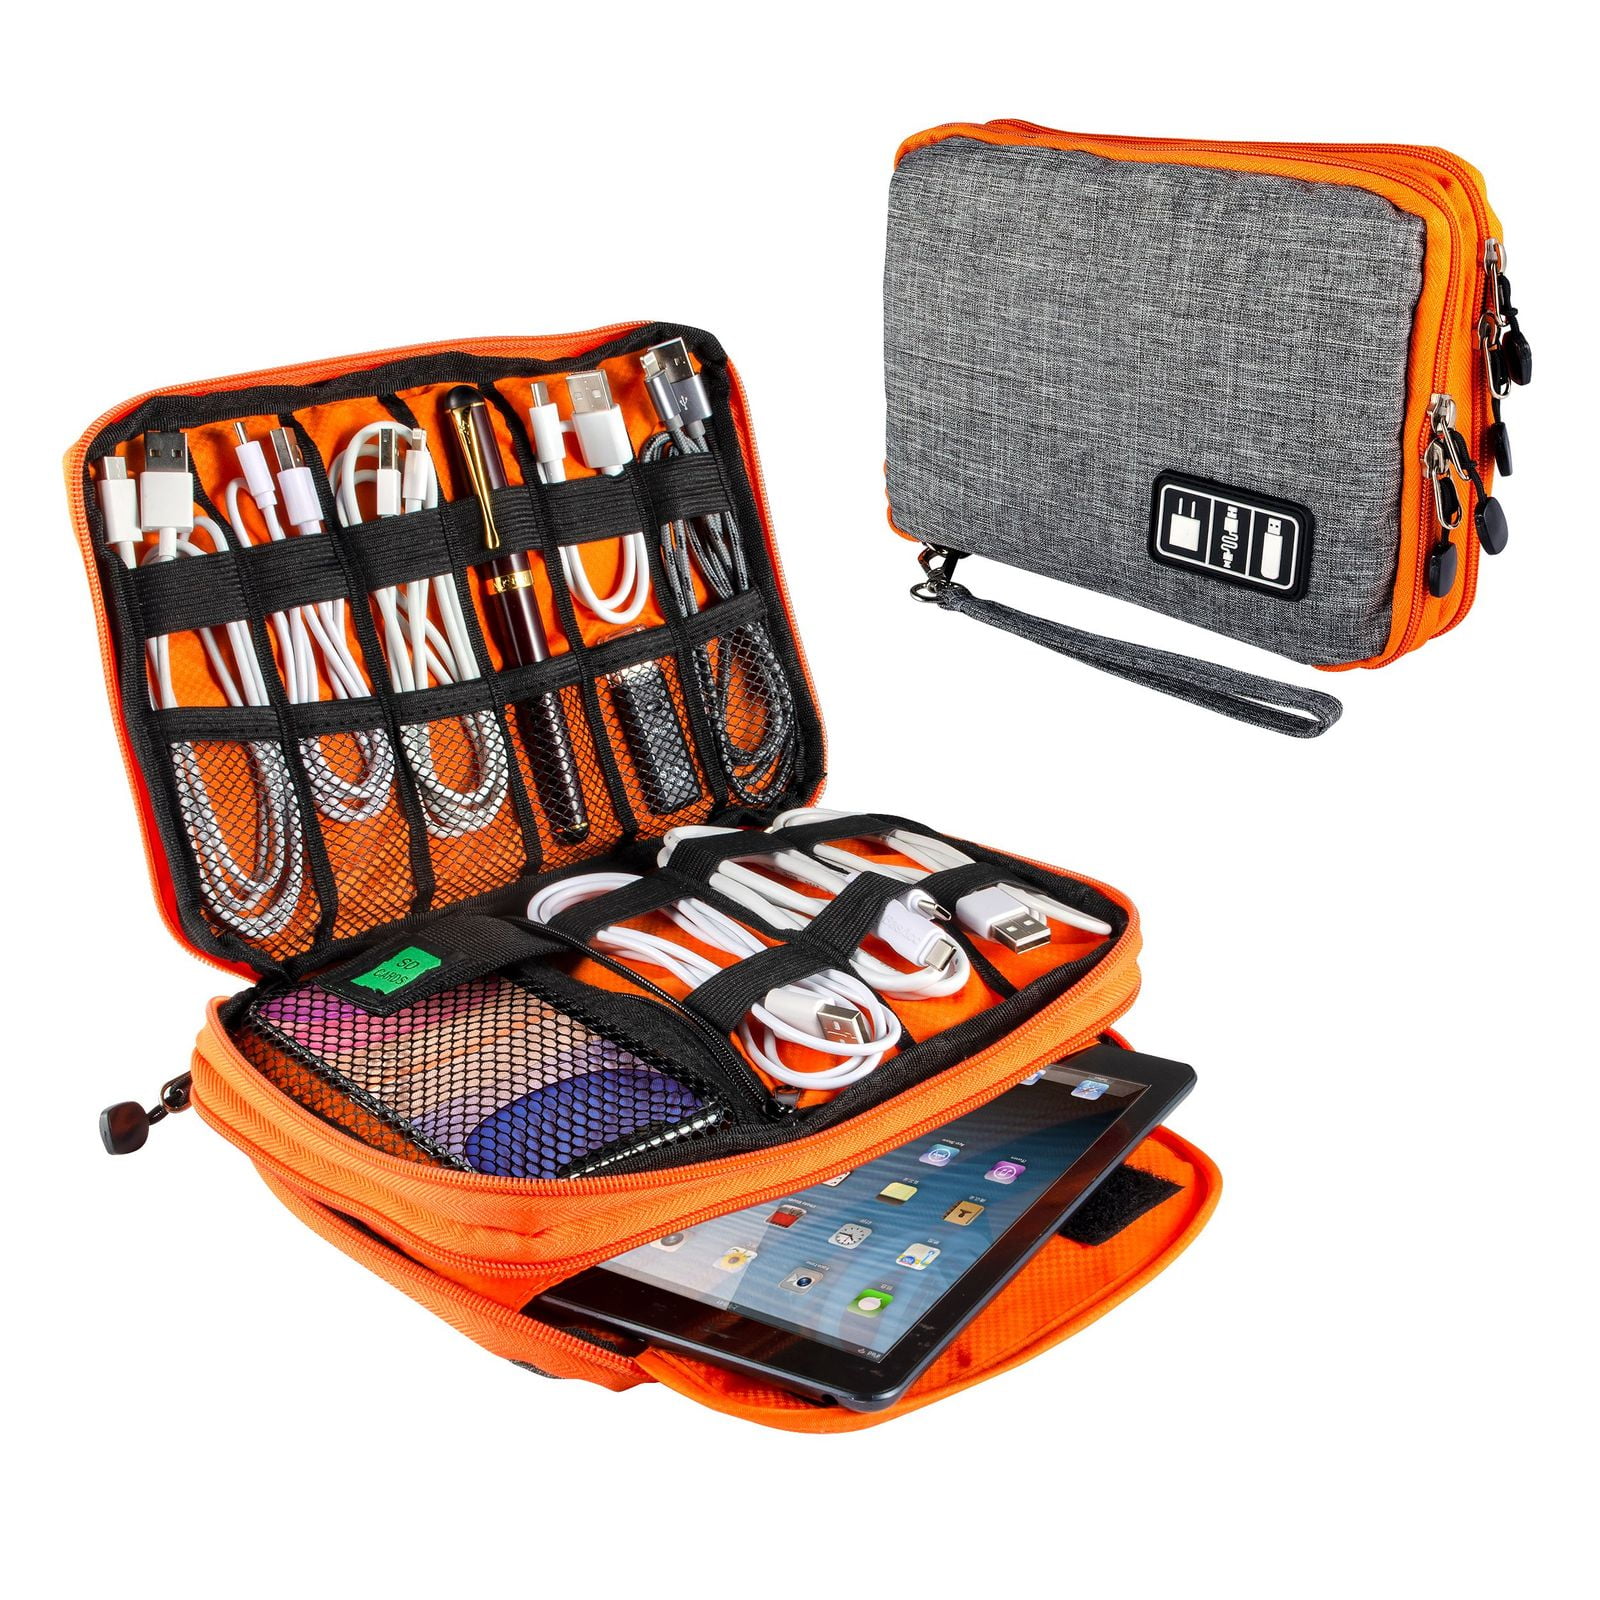 Ipad Organizer Waterproof USB Cable Earphone Pen Travel Storage Bag Kit Case Dig